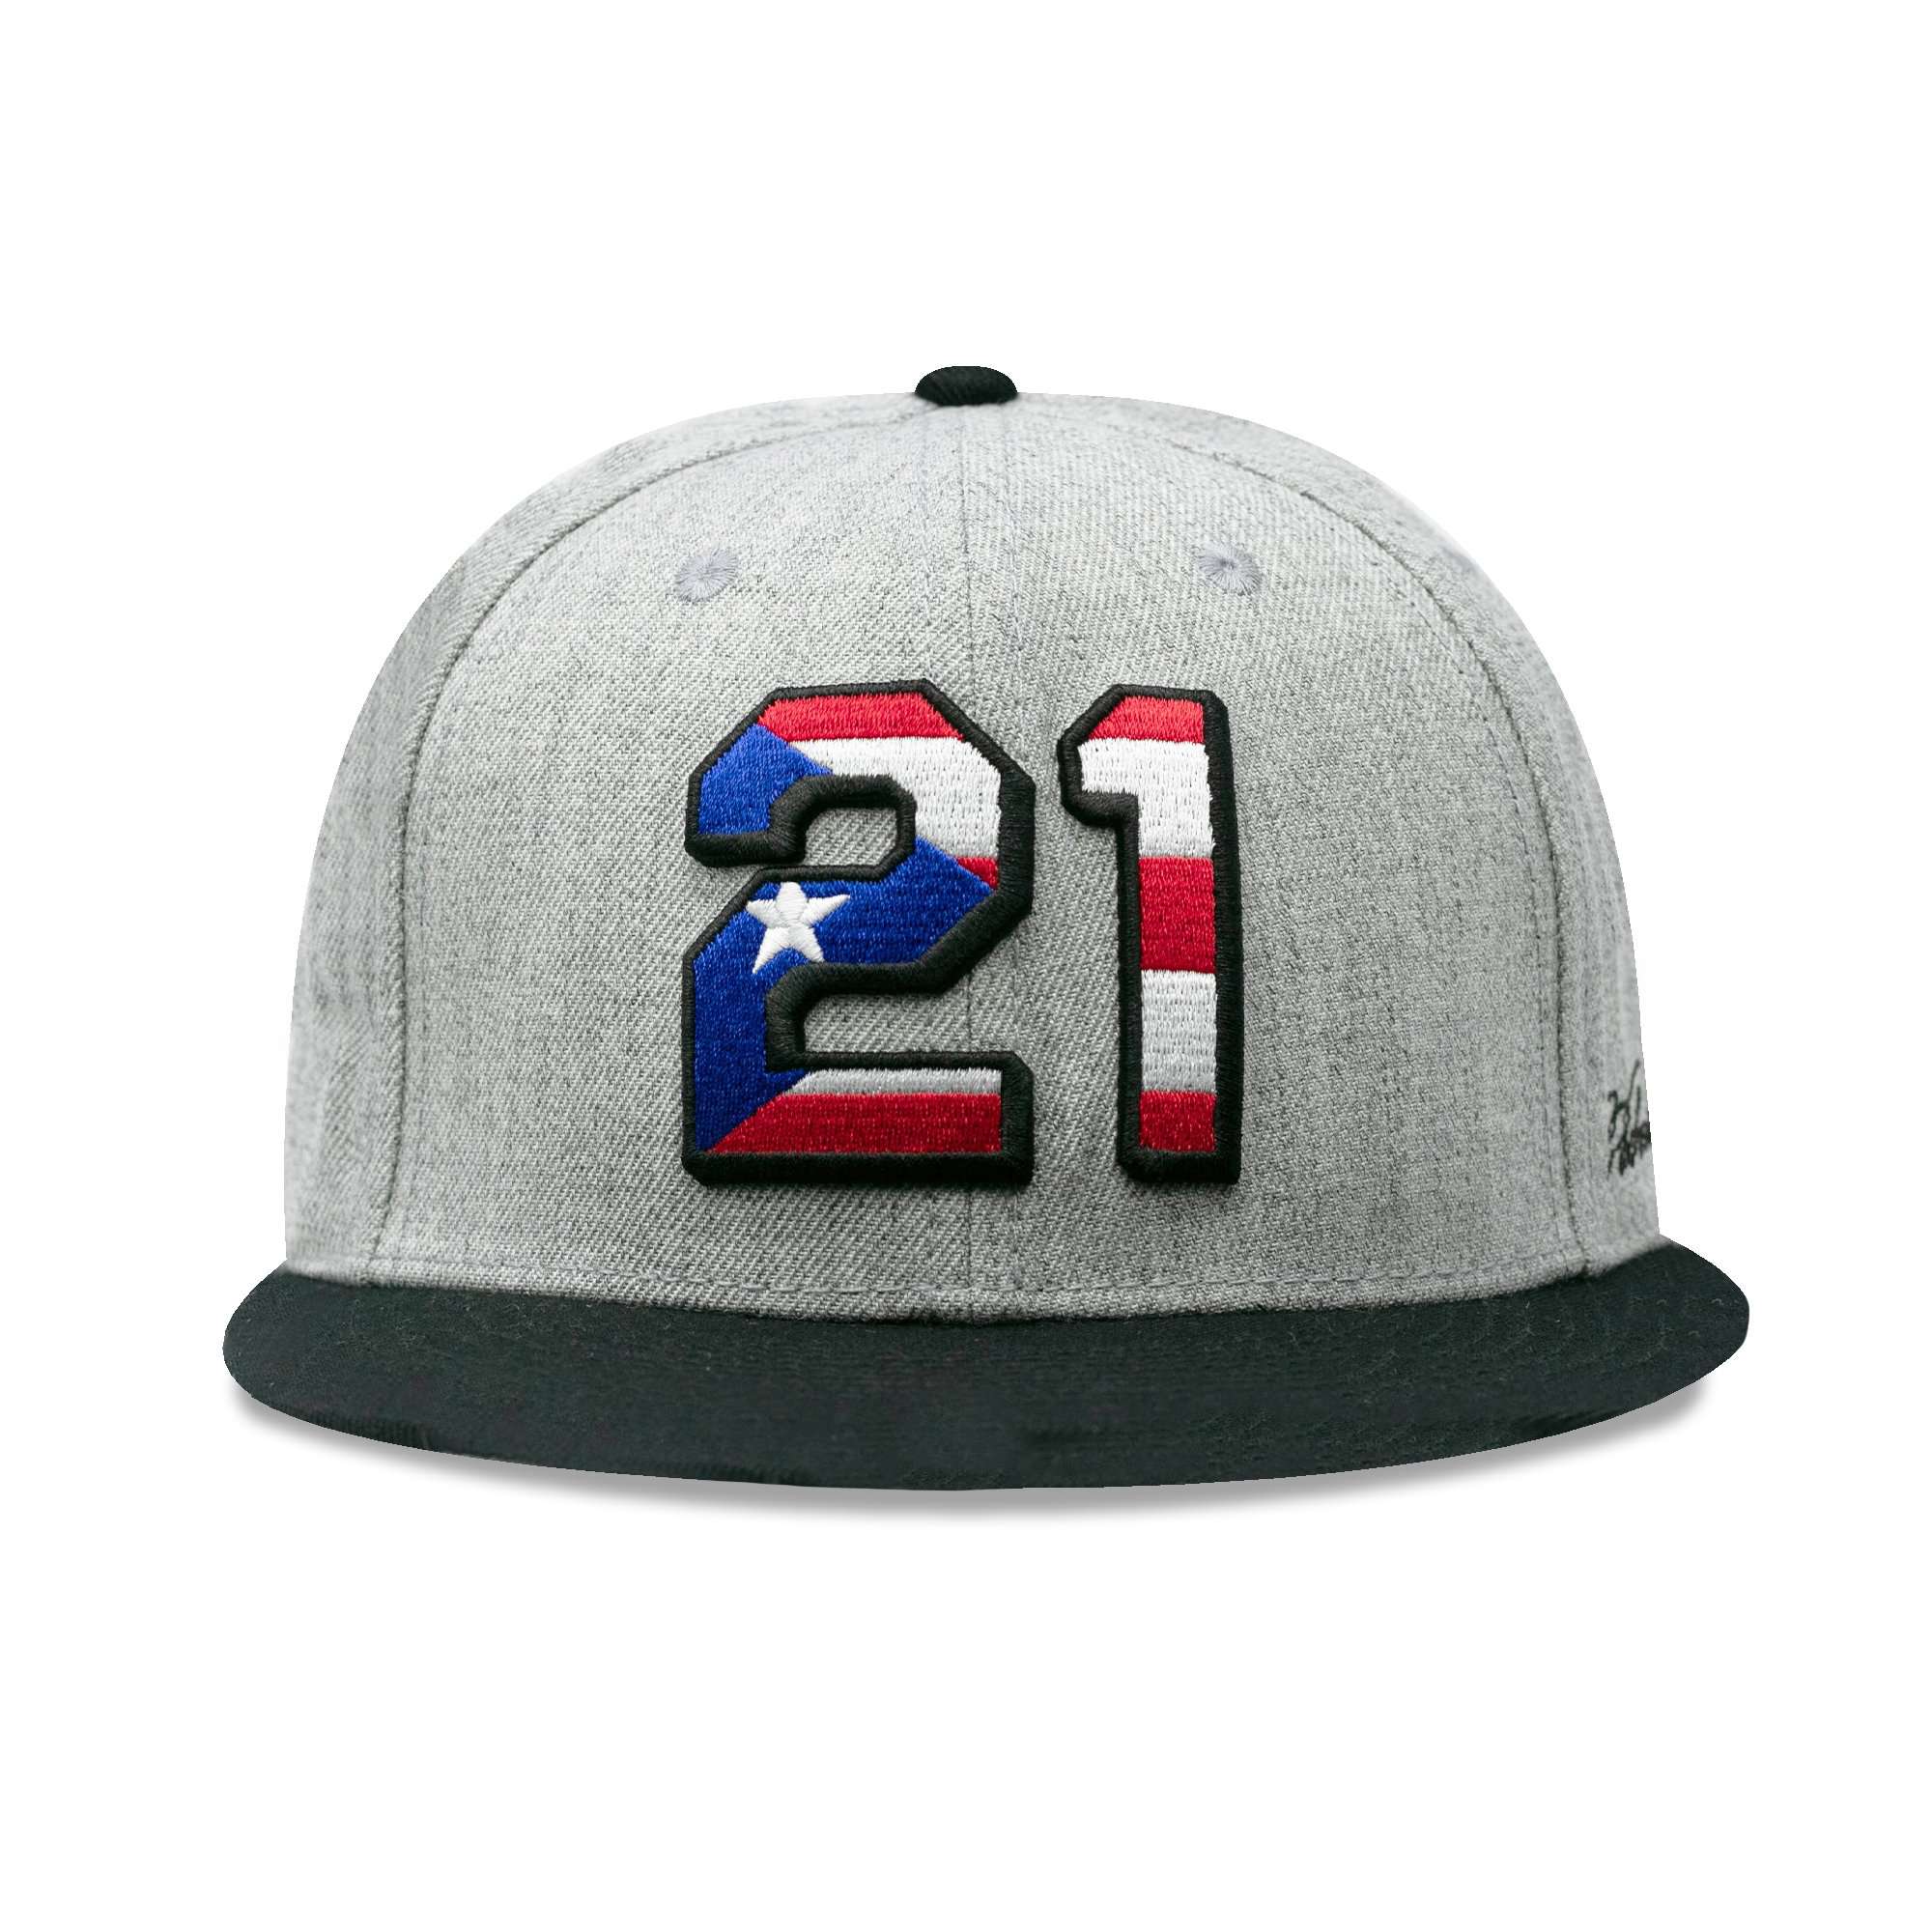 Men's Puerto Rico Baseball Caps,Roberto Clemente #21 World Game Classic Hats